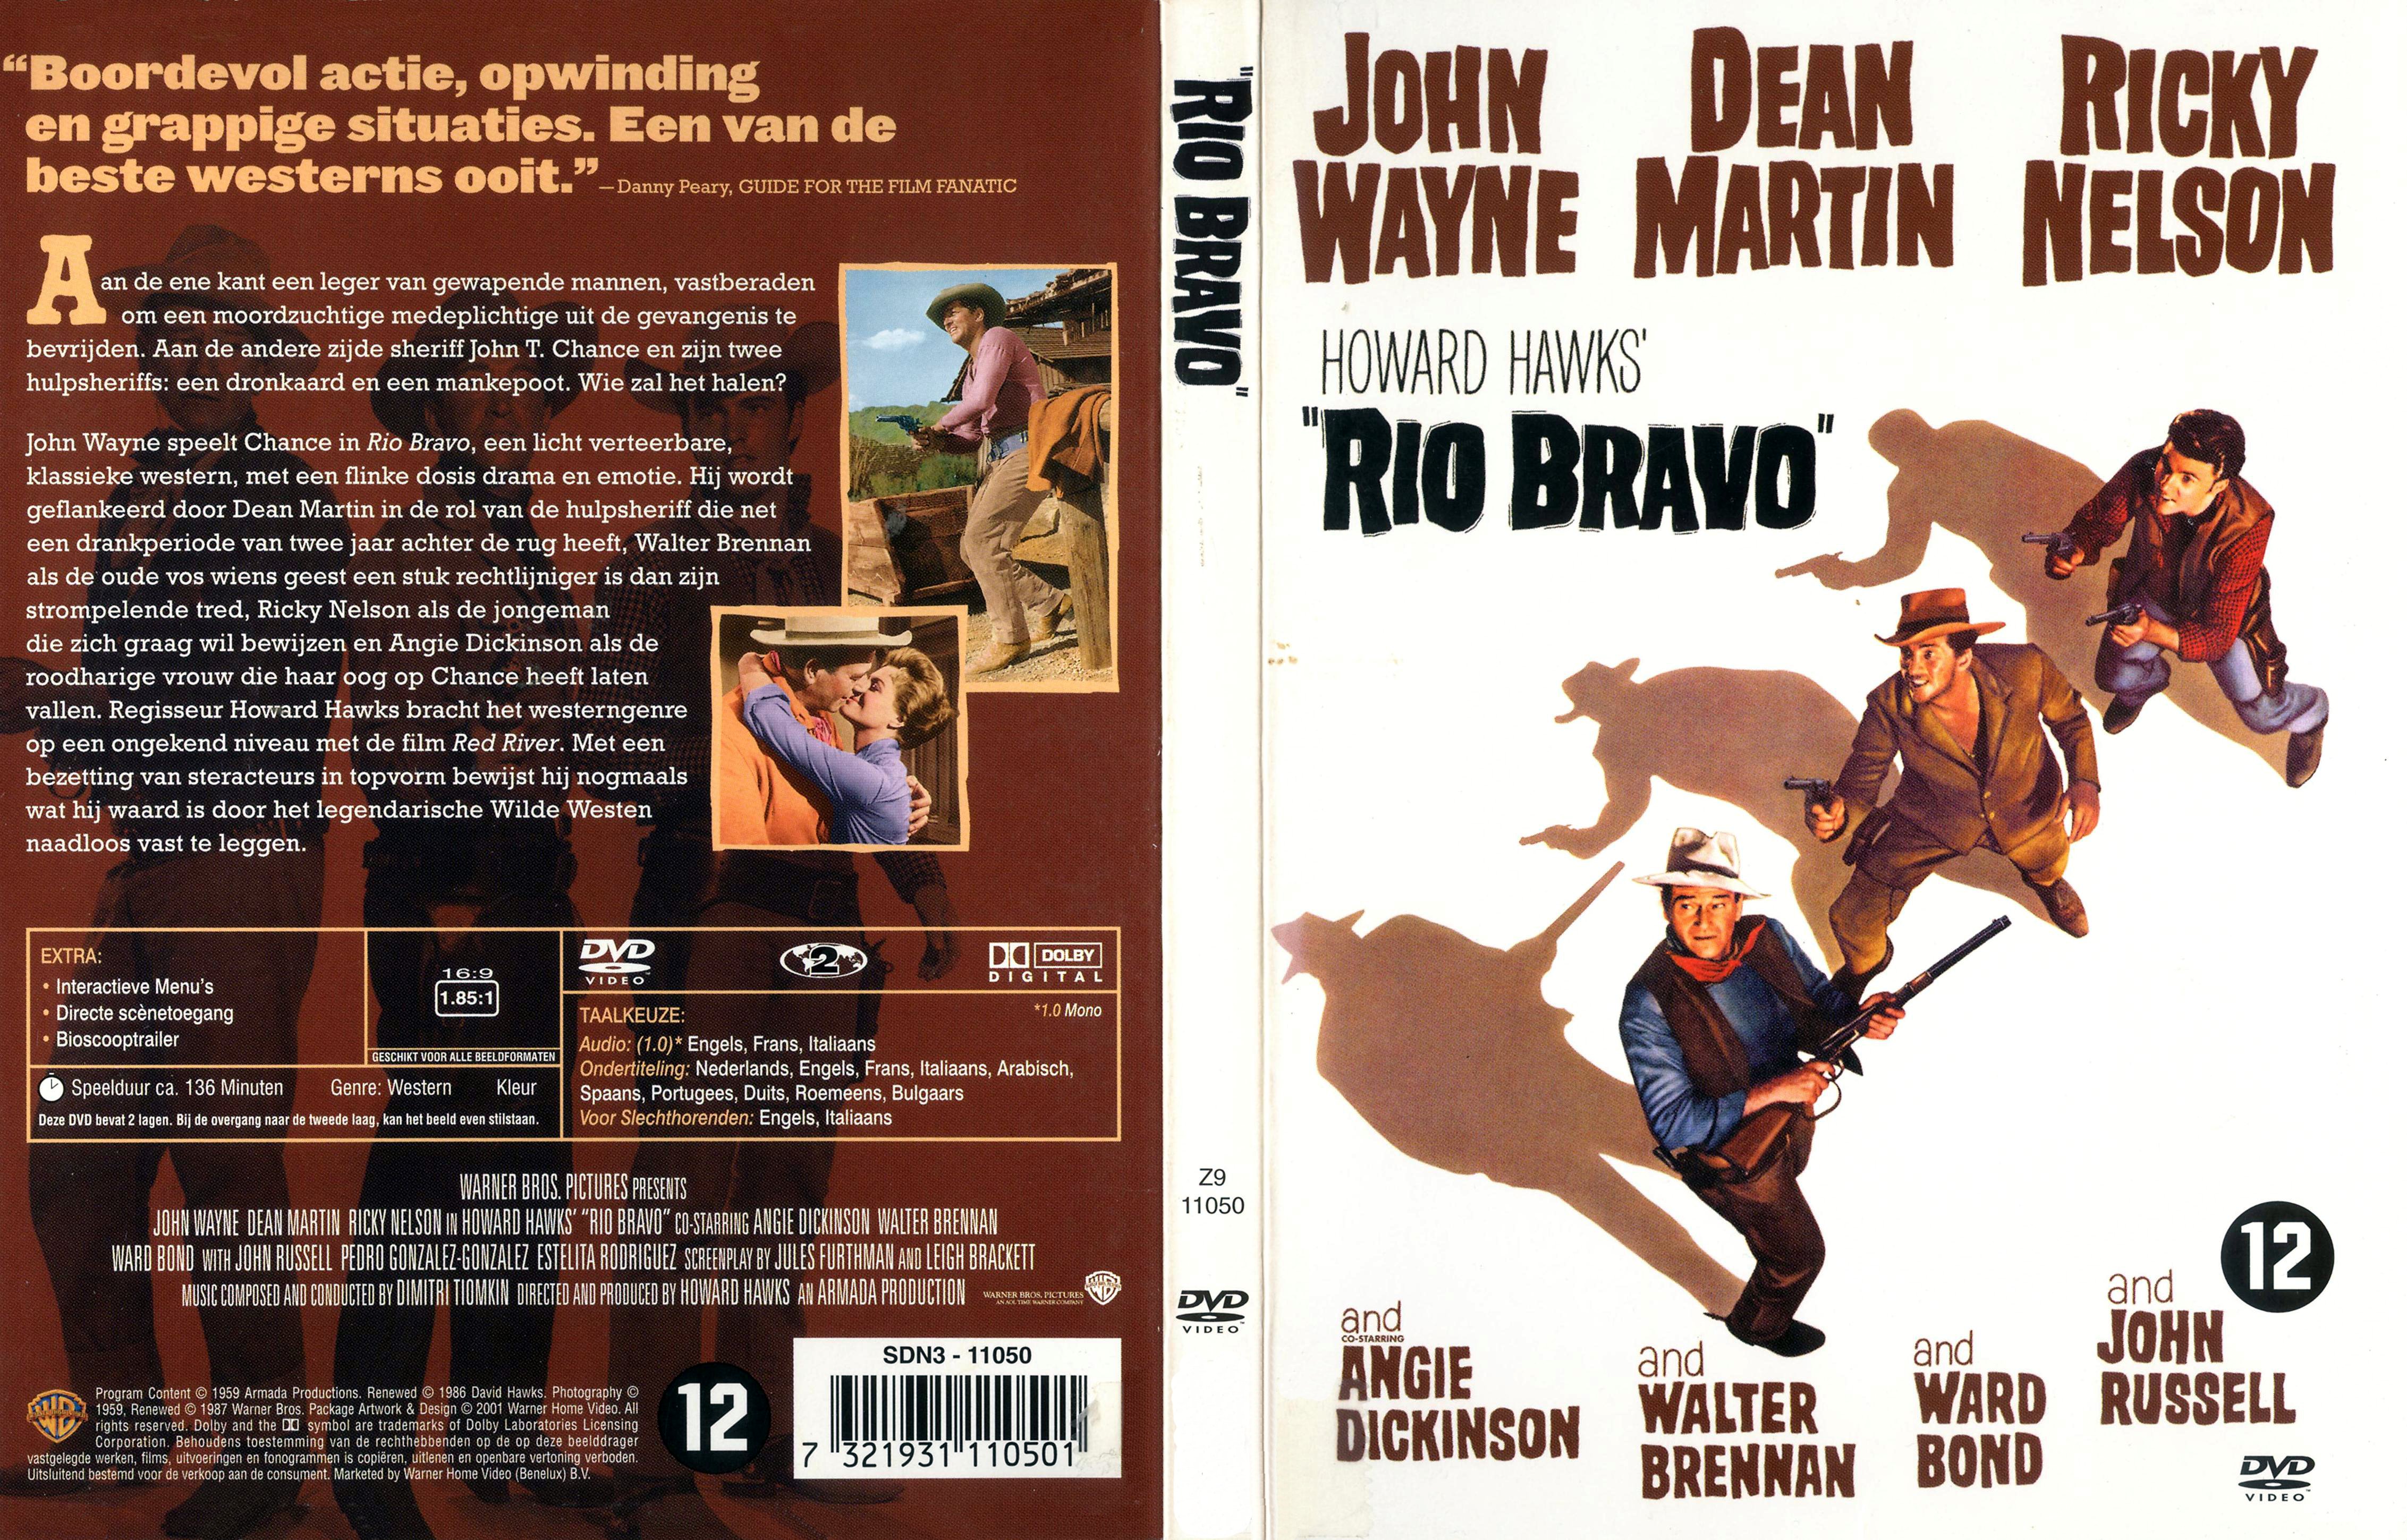 Jaquette DVD Rio Bravo v3